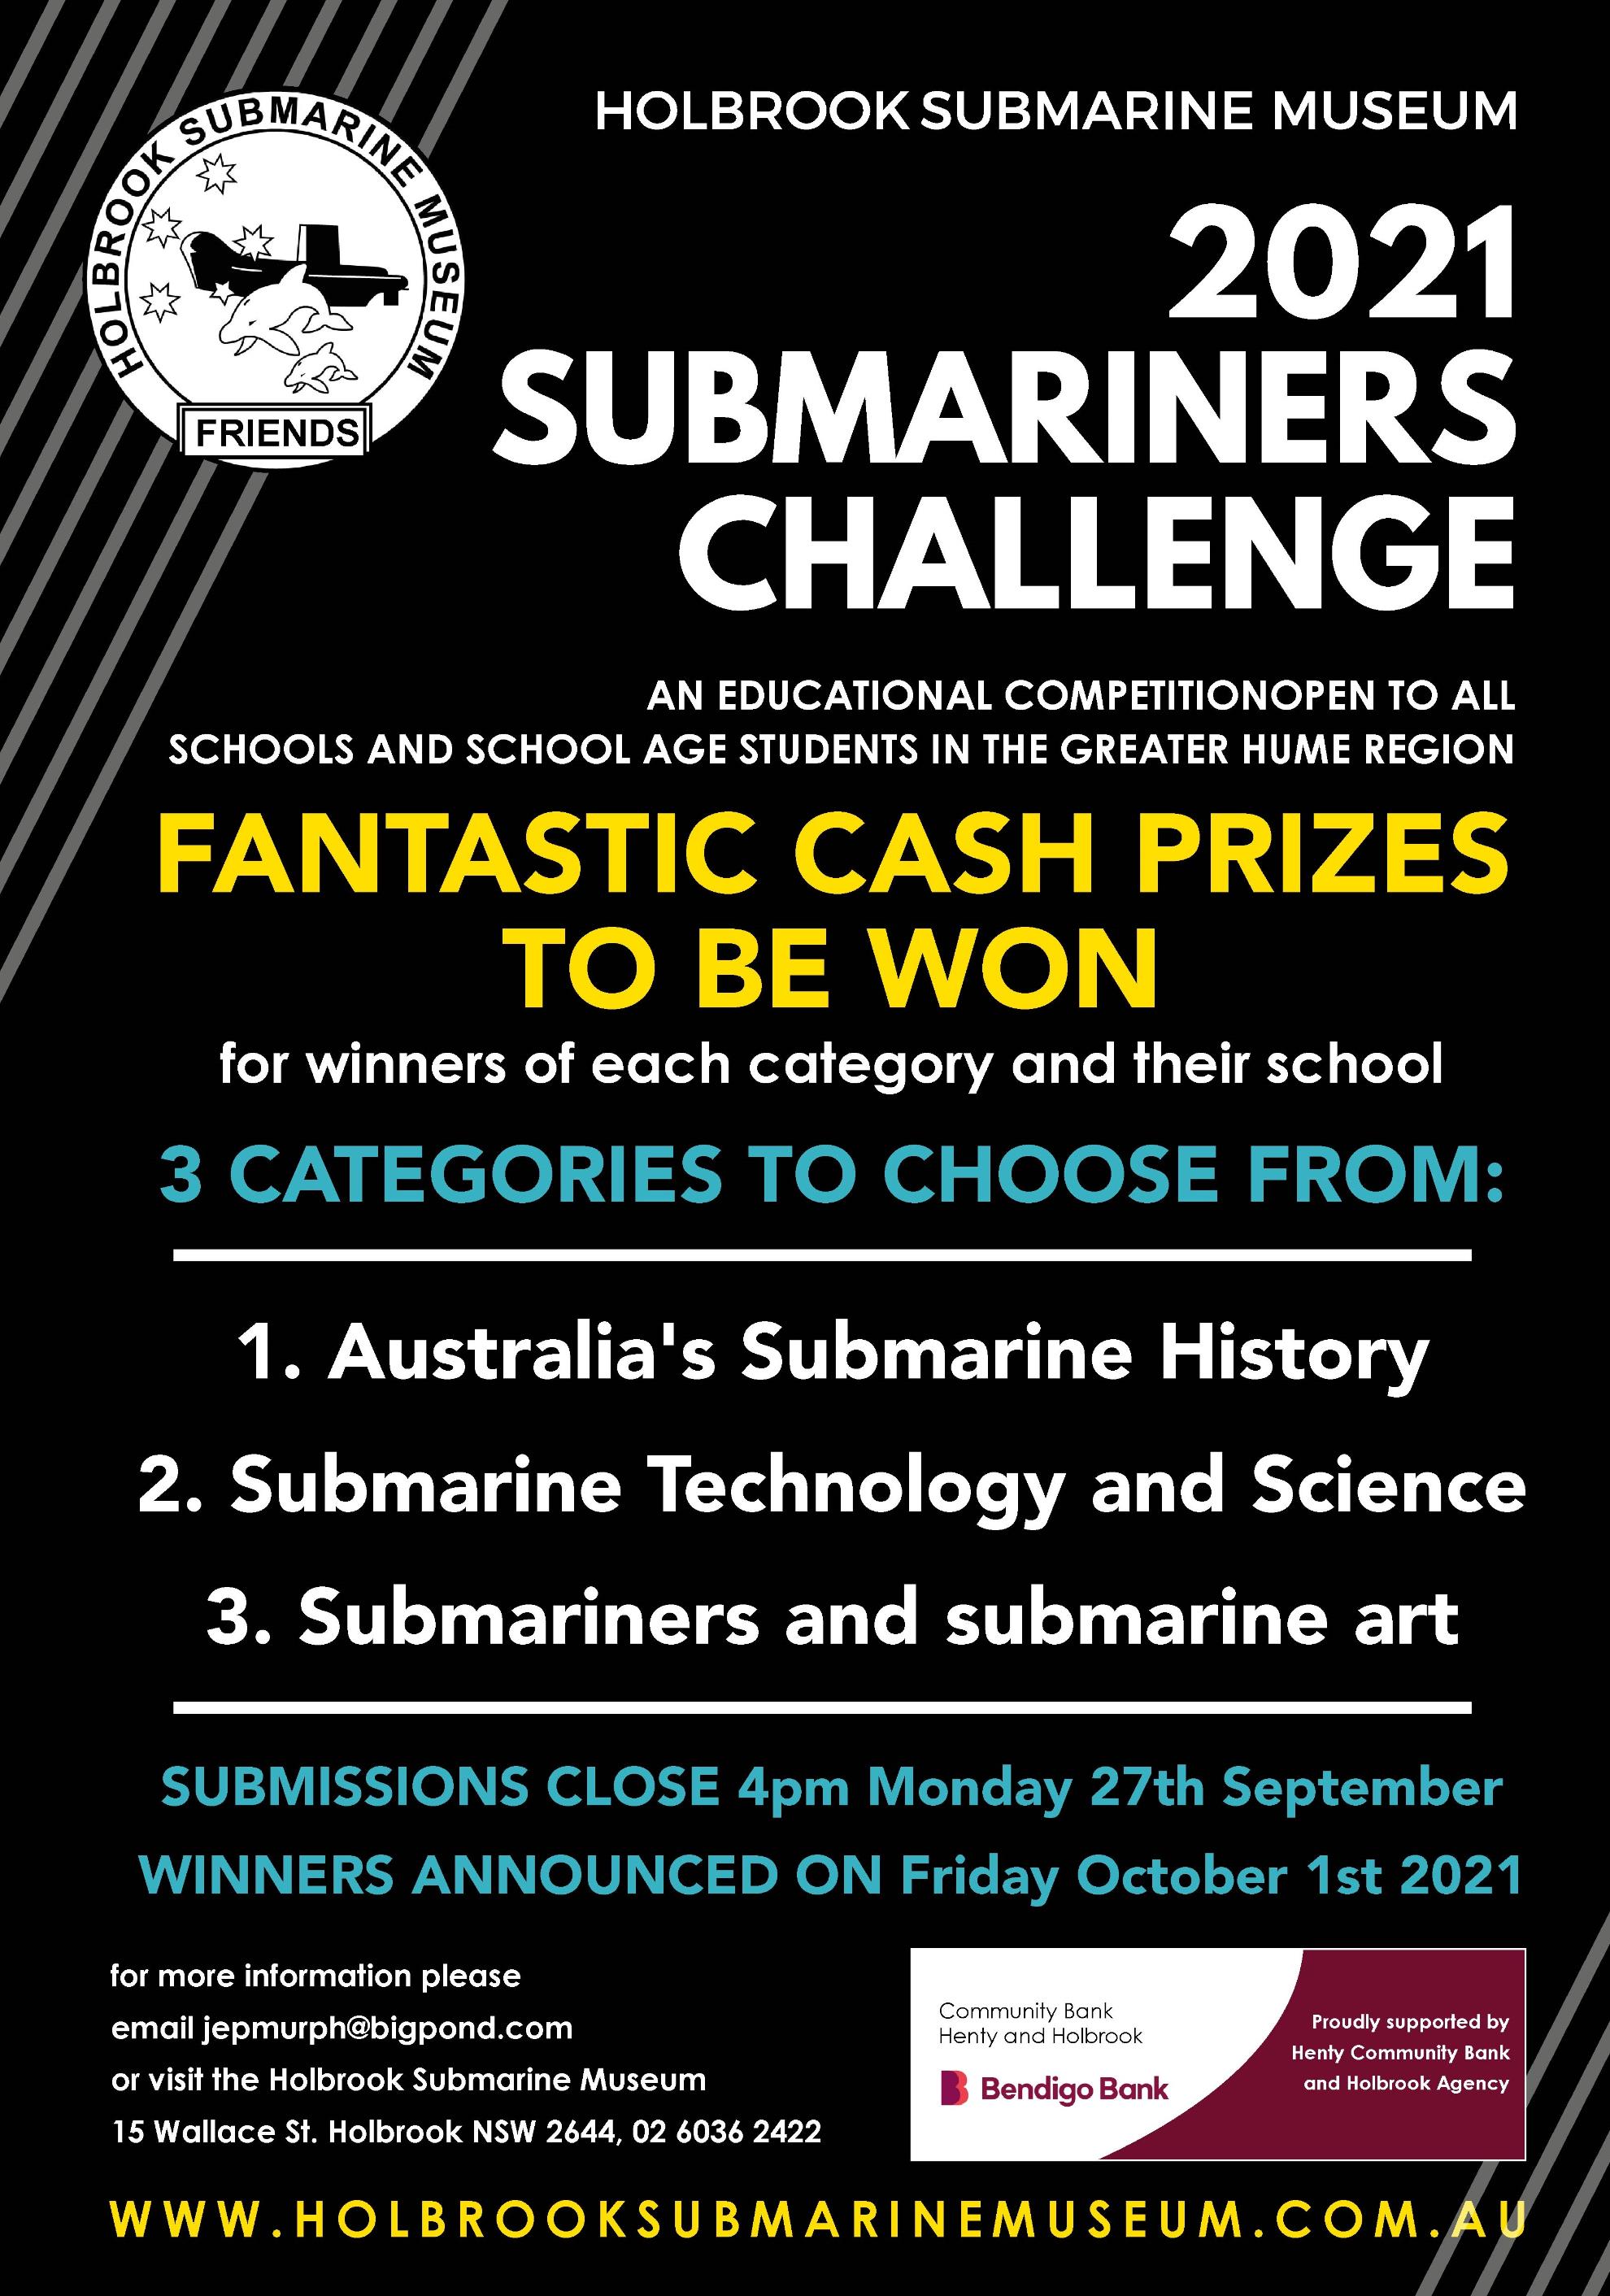 FHSM_2021-Submariner-Challenge_A3-Poster.jpg